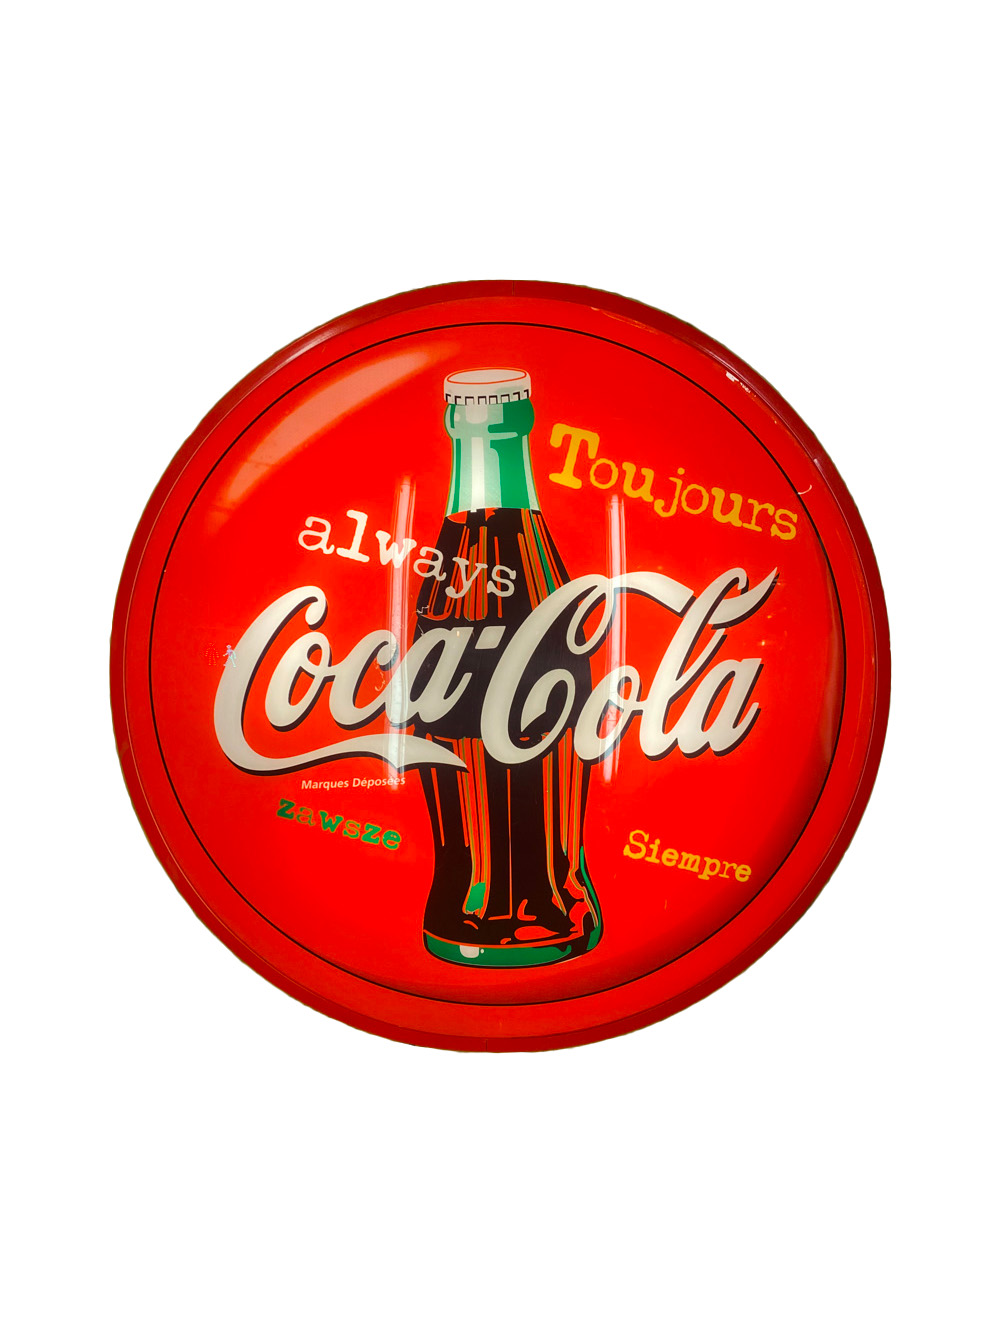 https://atelier416.fr/wp-content/uploads/2022/11/enseigne-coca-cola-1.jpg